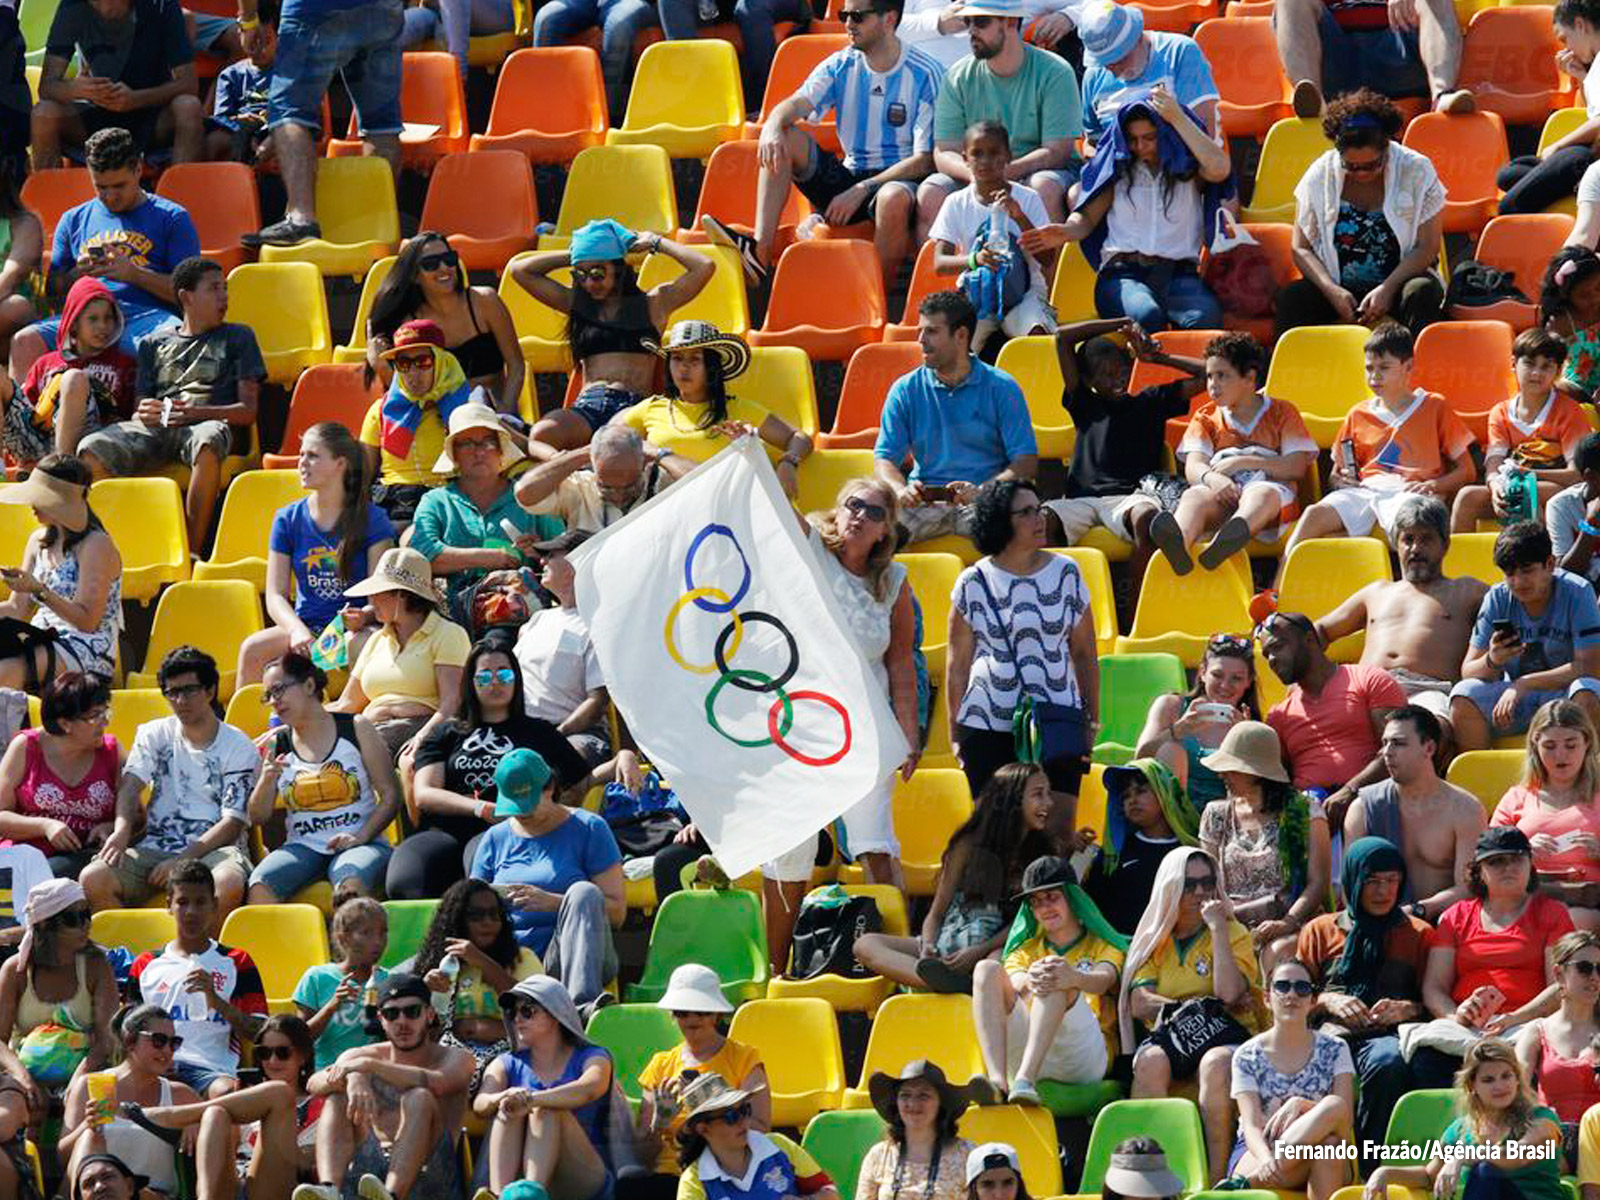 O legados deixado pelas olimpíadas Rio 2016